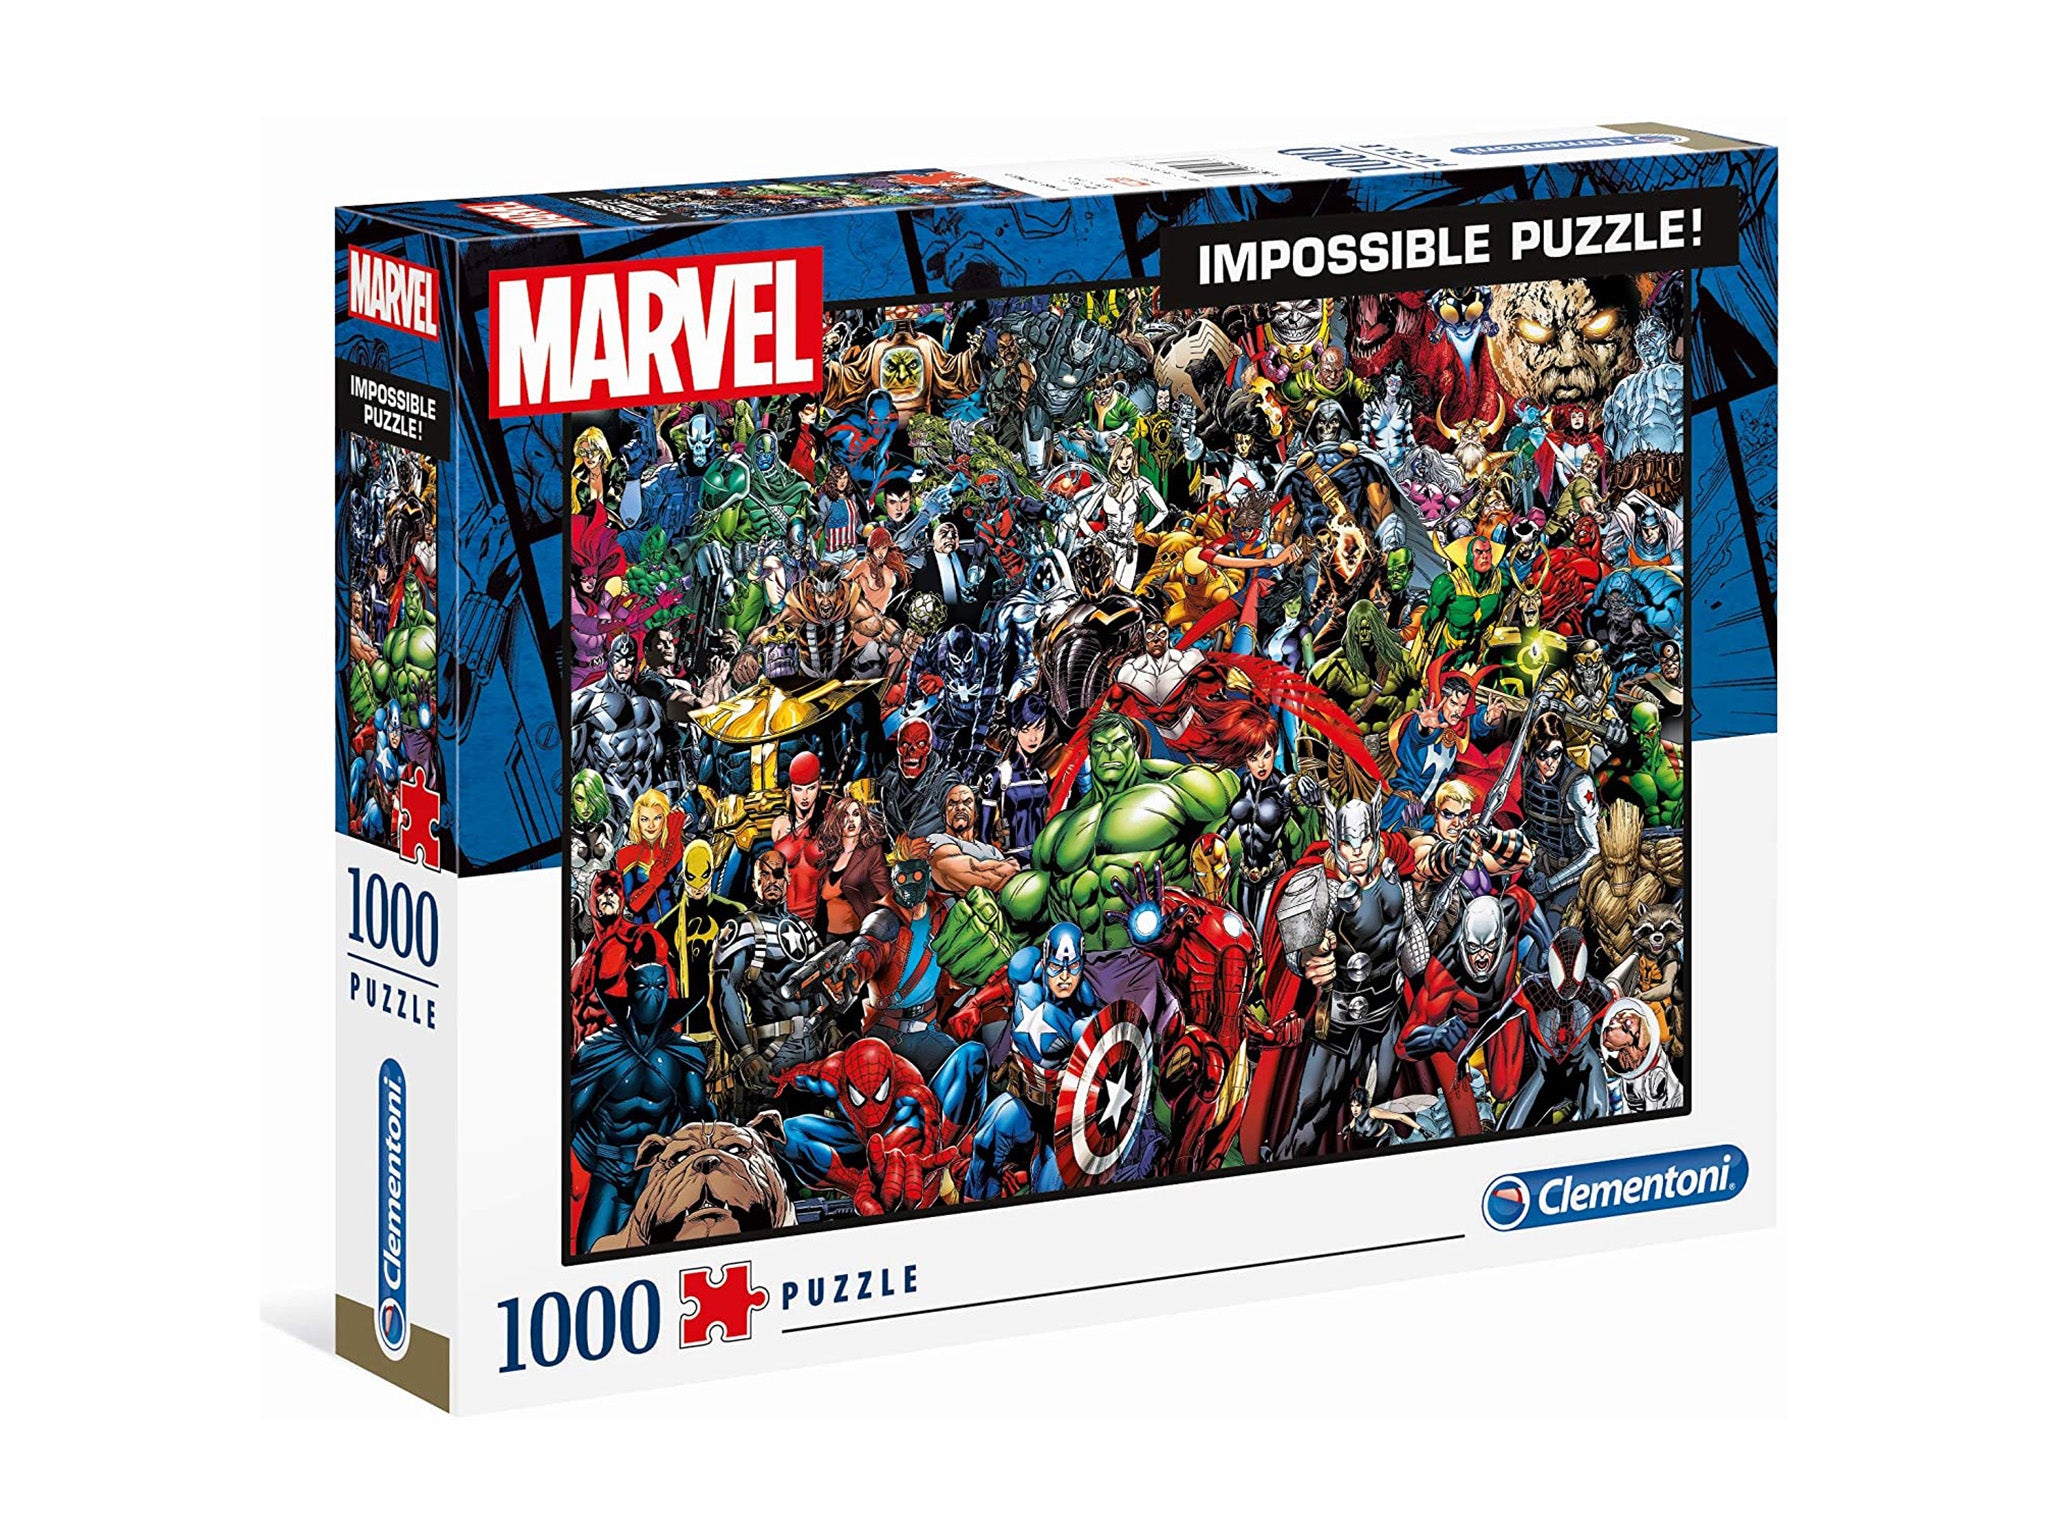 Clementoni Marvel Avengers impossible 1000 piece puzzle indybest.jpg